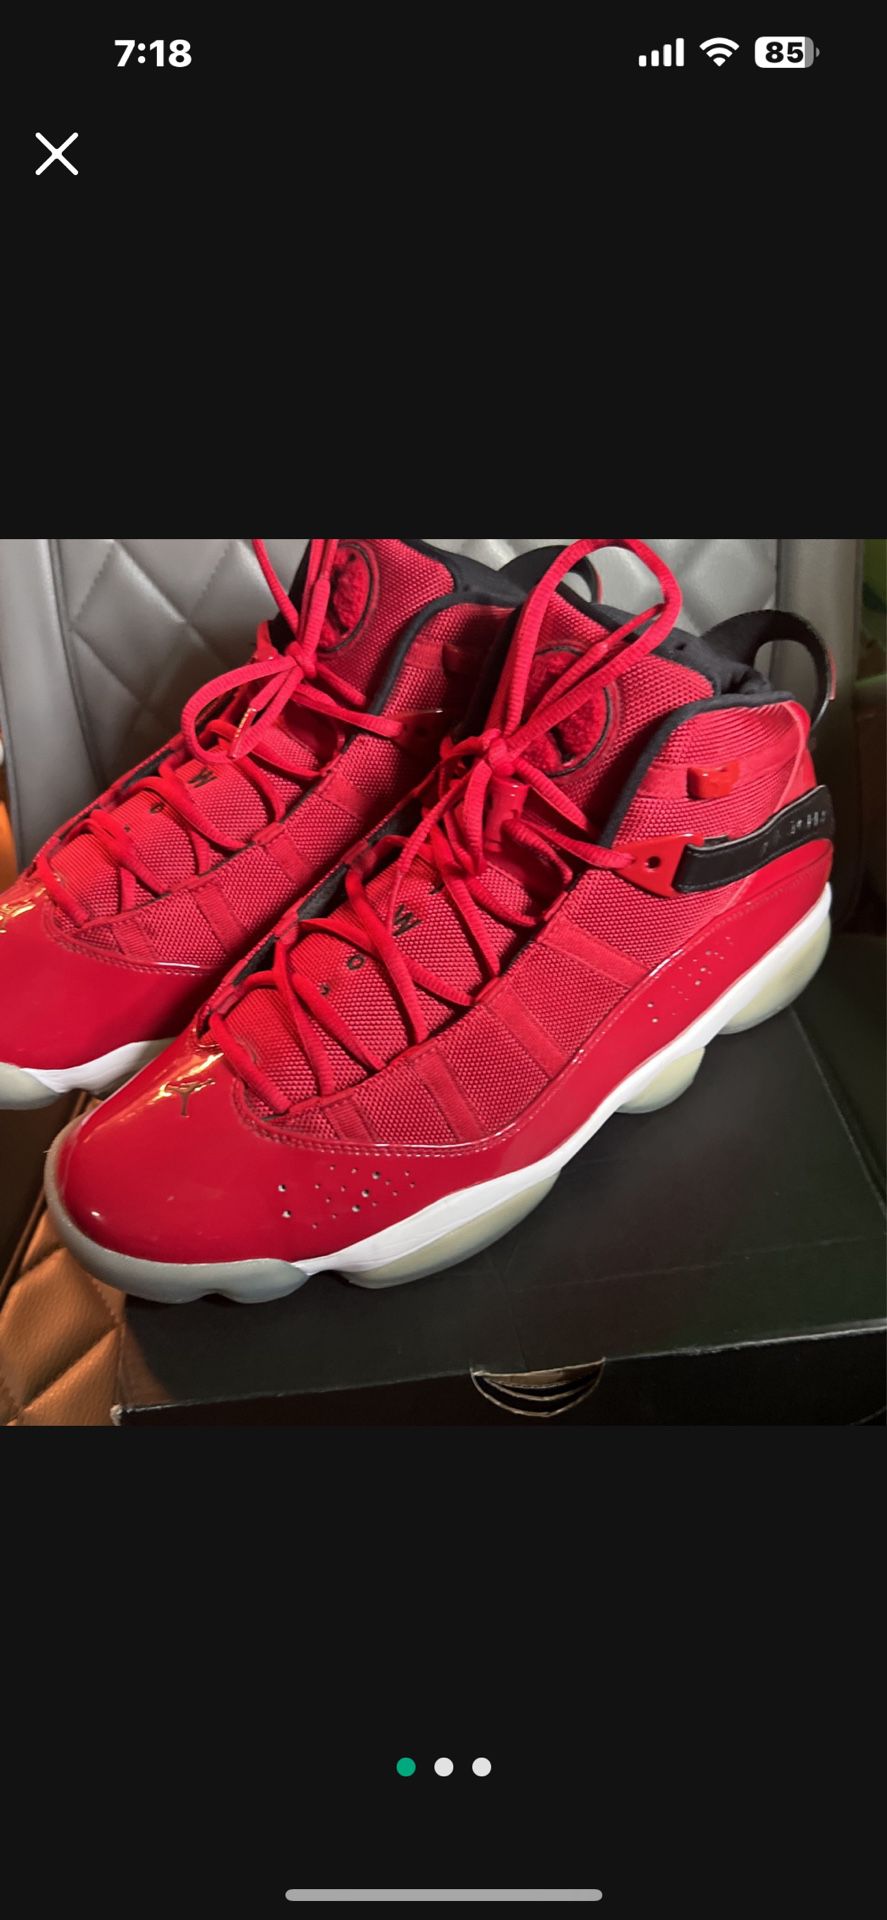 Air Jordan "Gym Red" Size 13